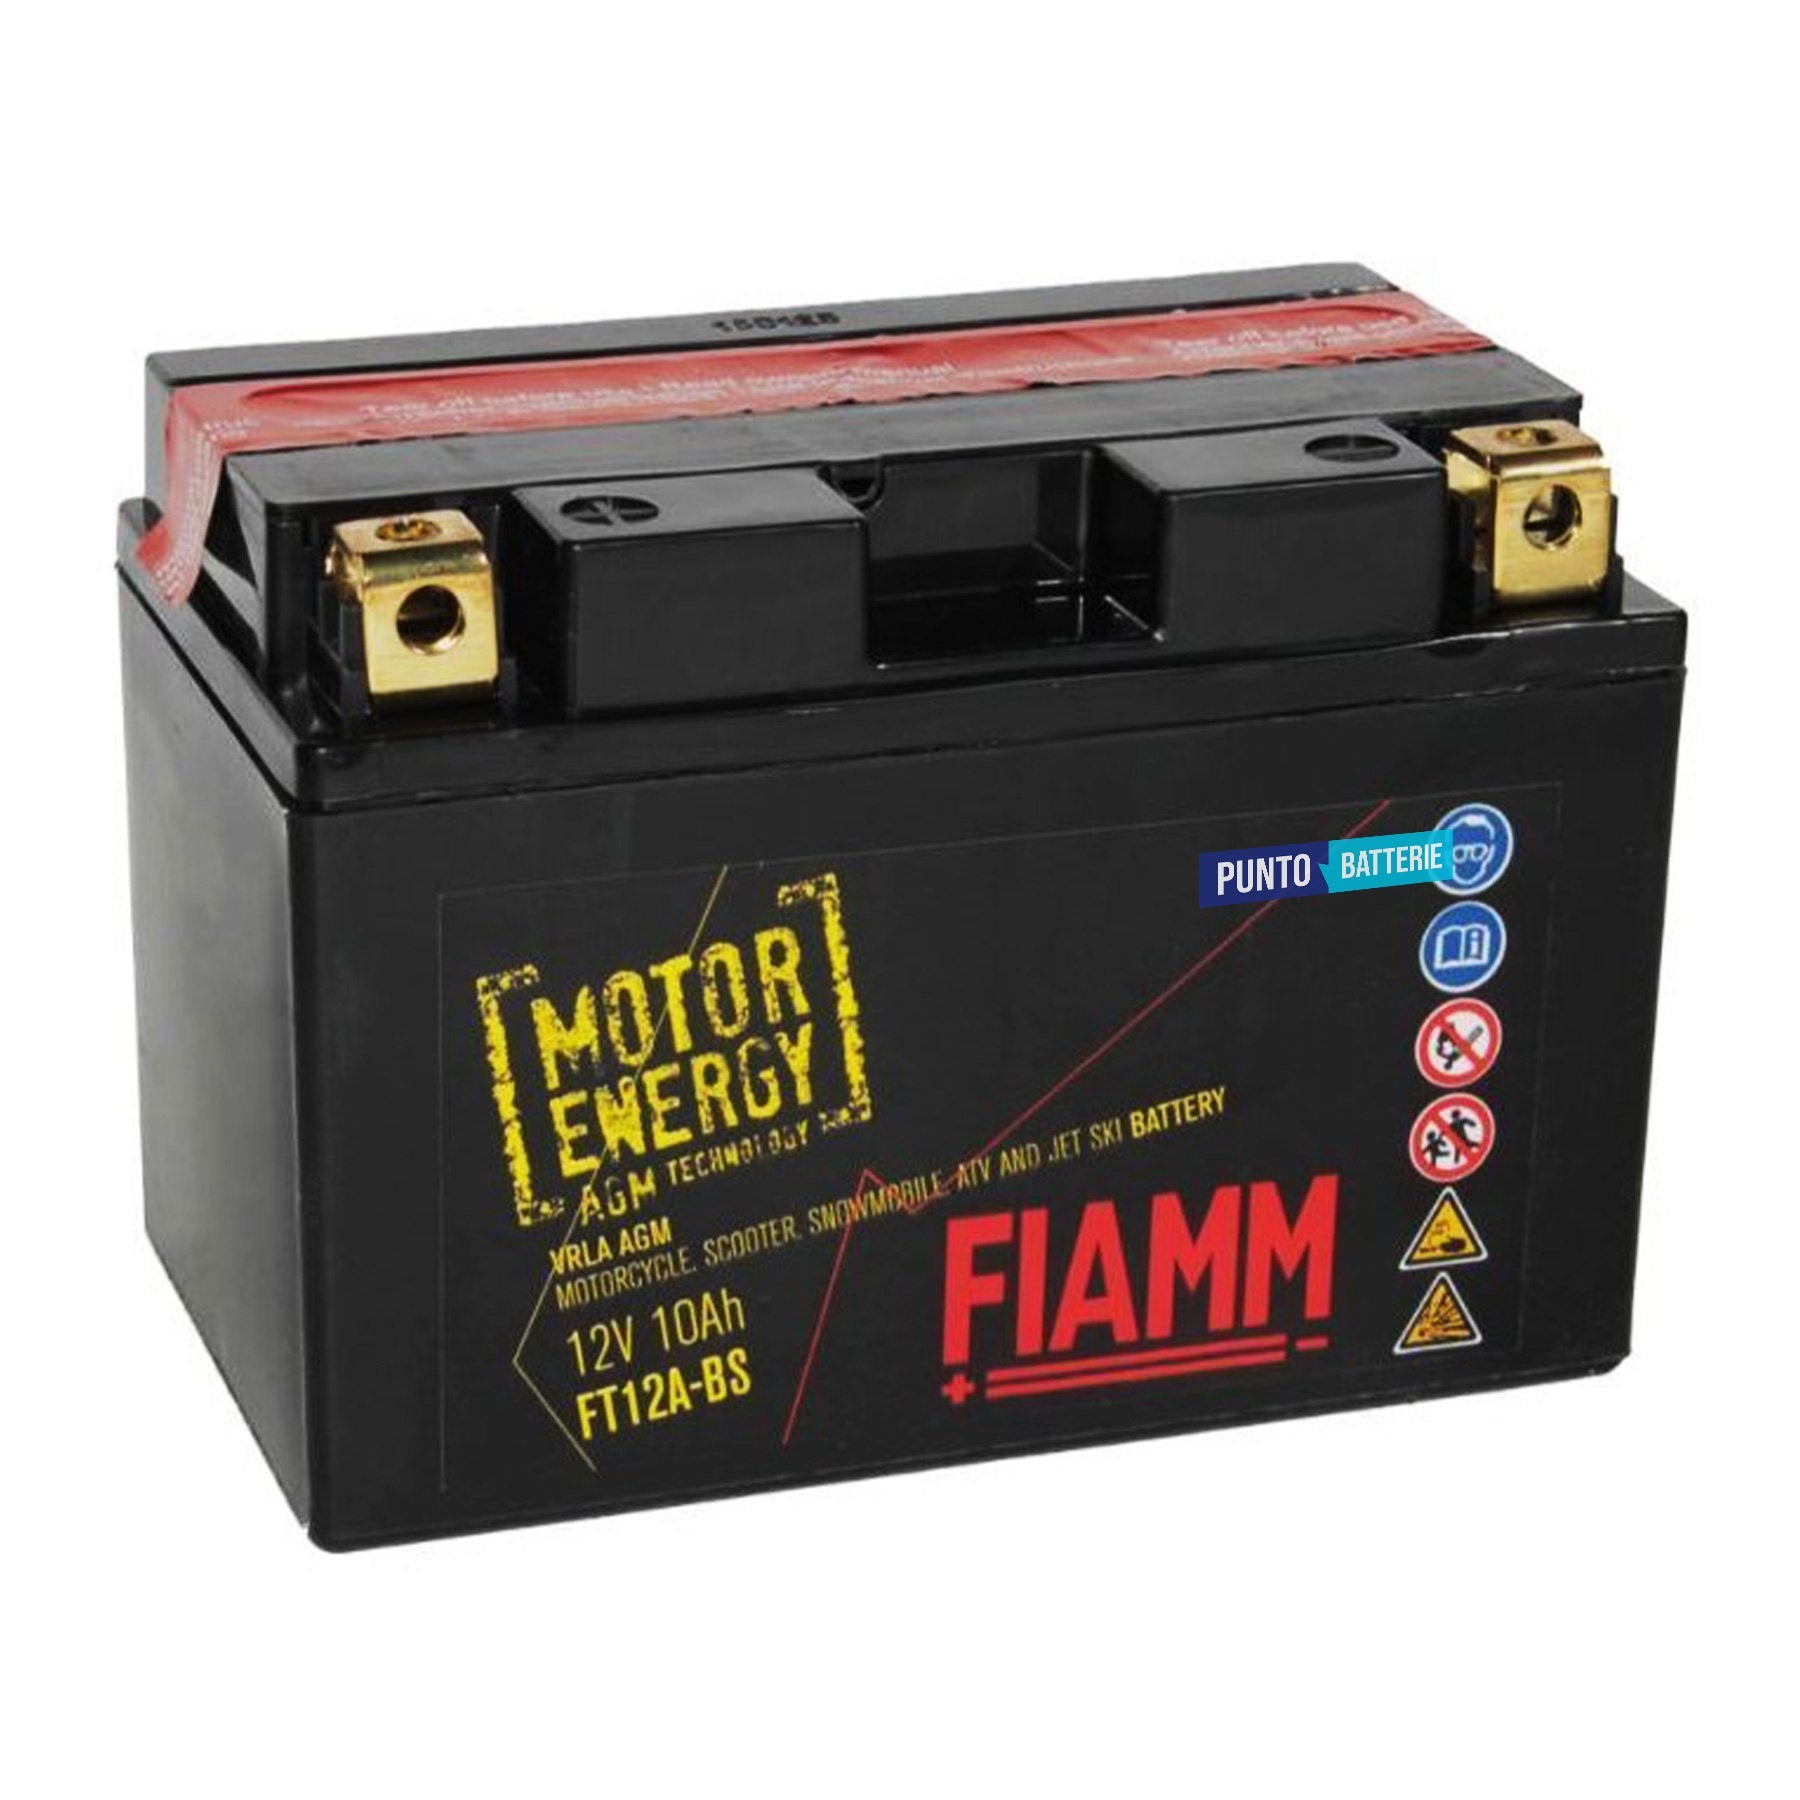 Batteria originale Fiamm Motor Energy AGM FT12A-BS, dimensioni 150 x 87 x 105, polo positivo a sinistra, 12 volt, 10 amperora, 160 ampere. Batteria per moto, scooter e powersport.